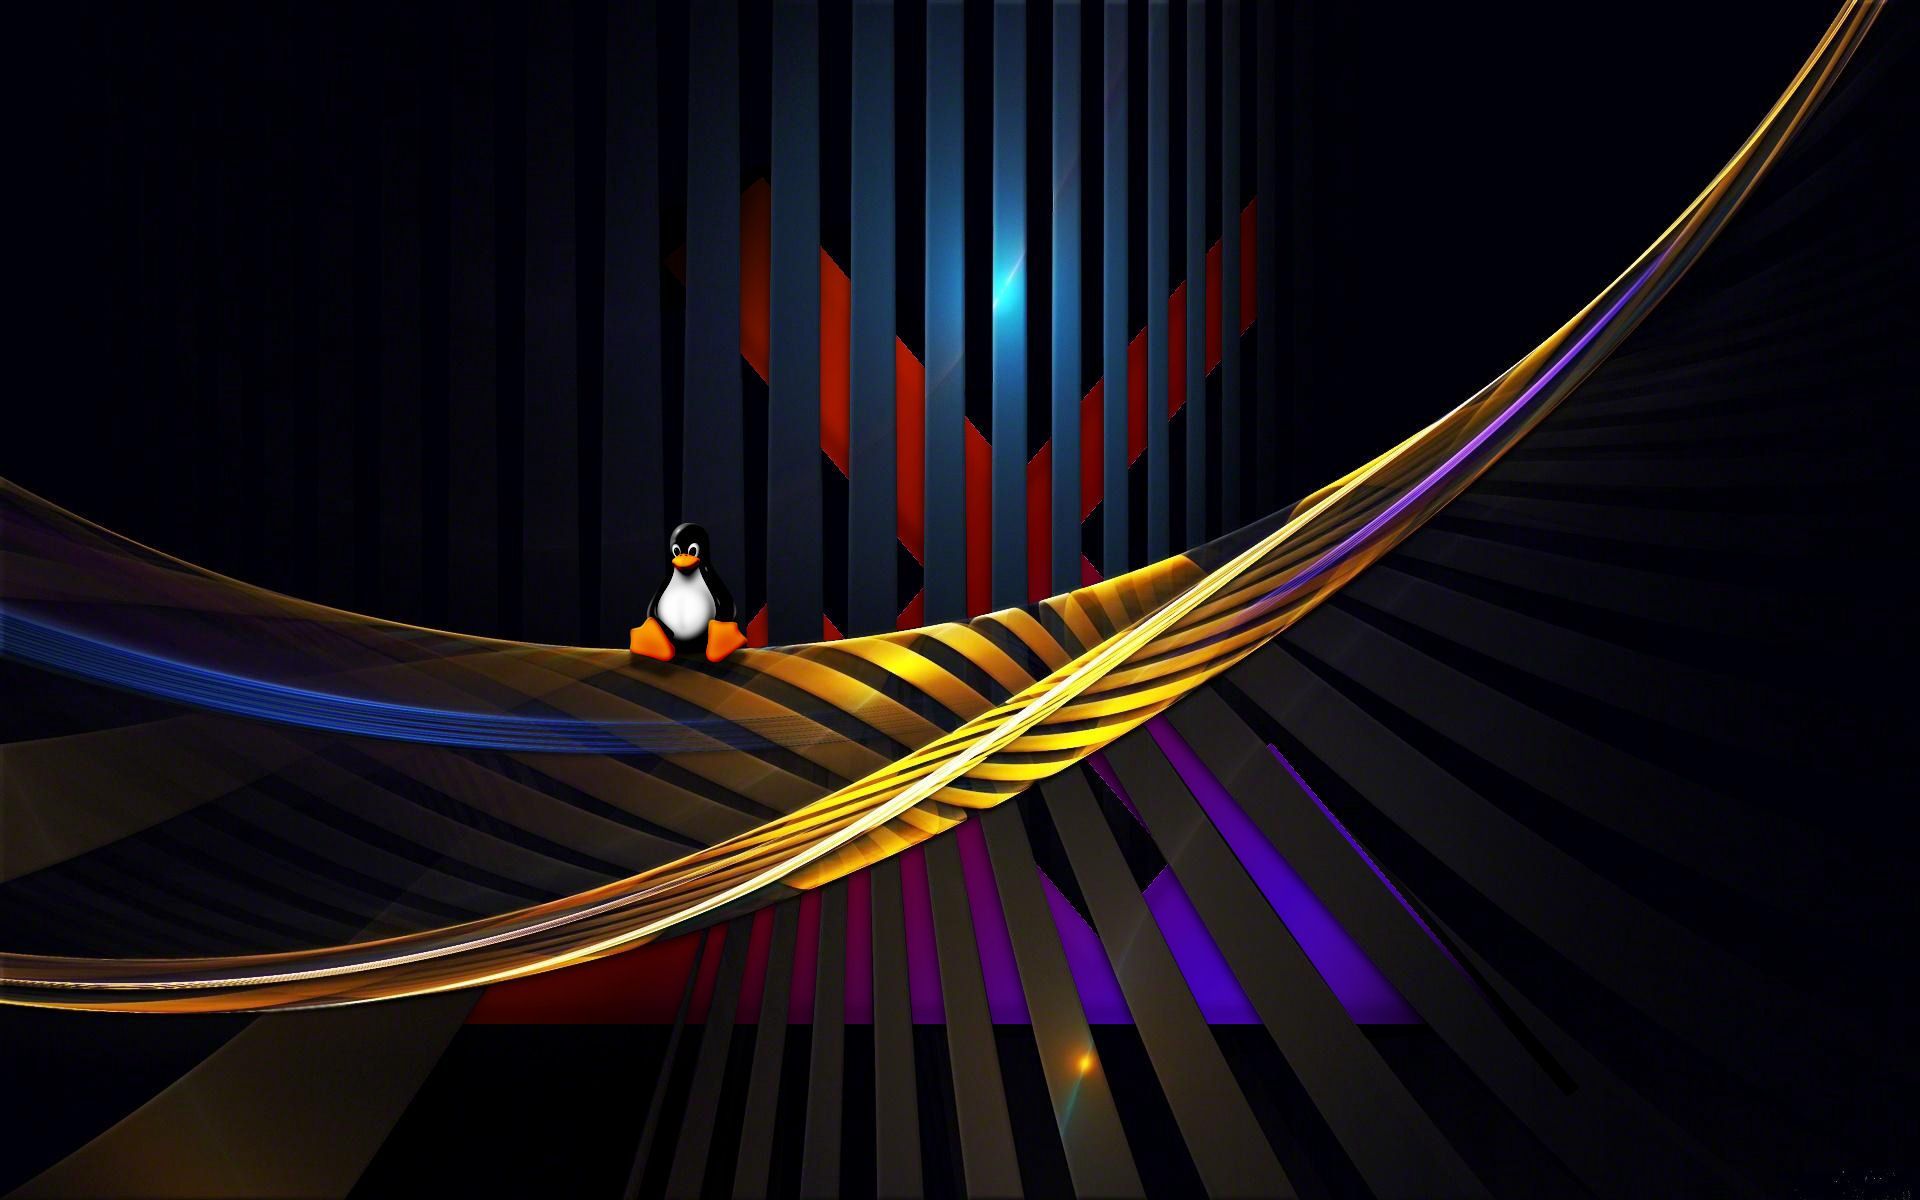 General 1920x1200 dark hammocks penguins shadow Linux stripes digital lighting curved digital art